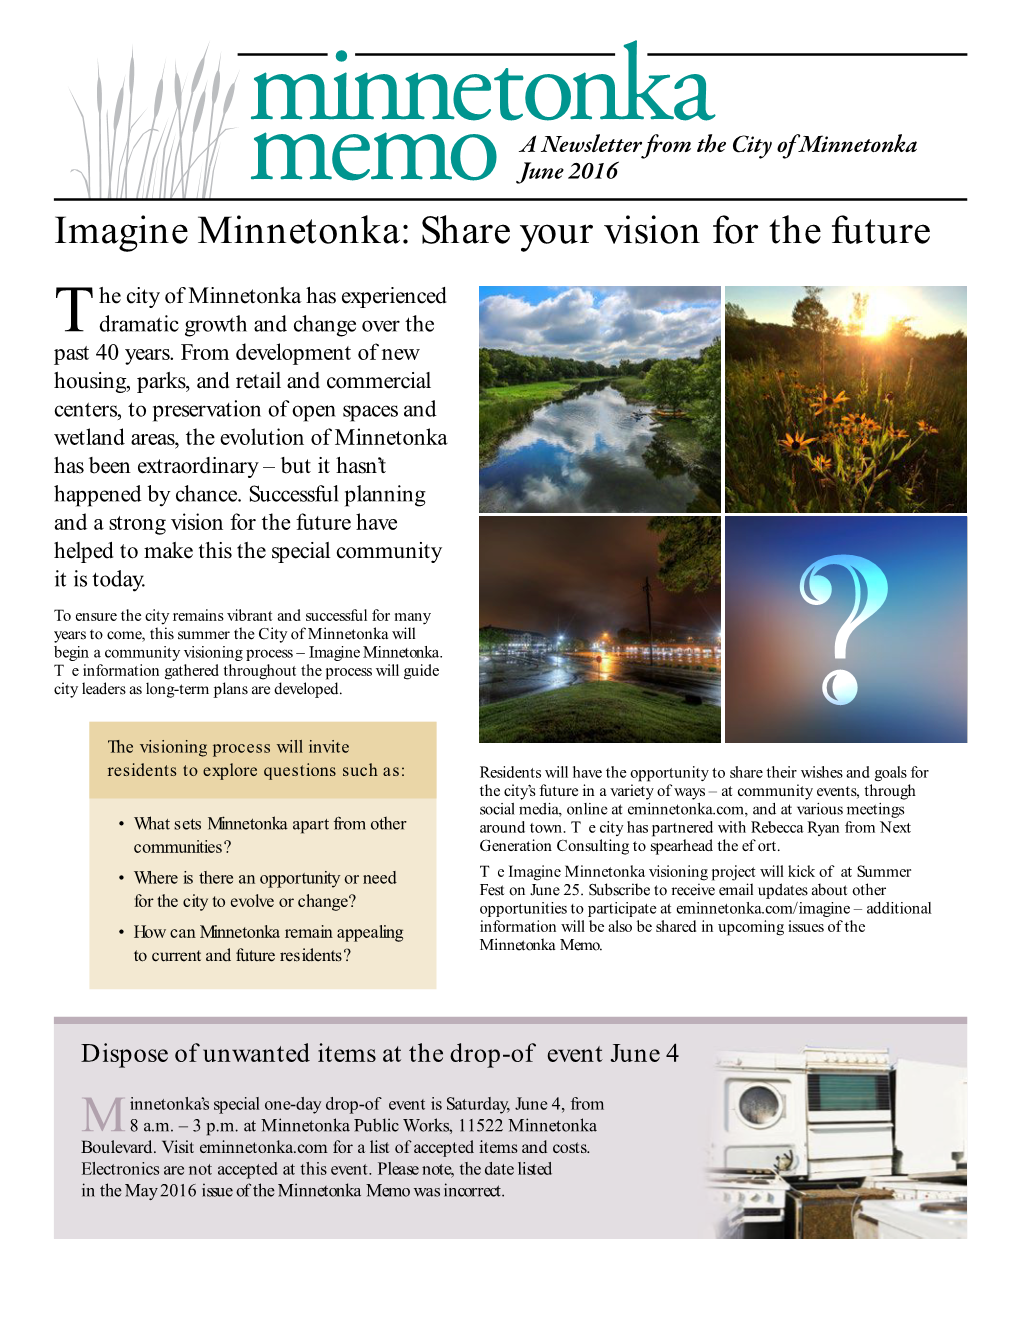 Imagine Minnetonka: Share Your Vision for the Future